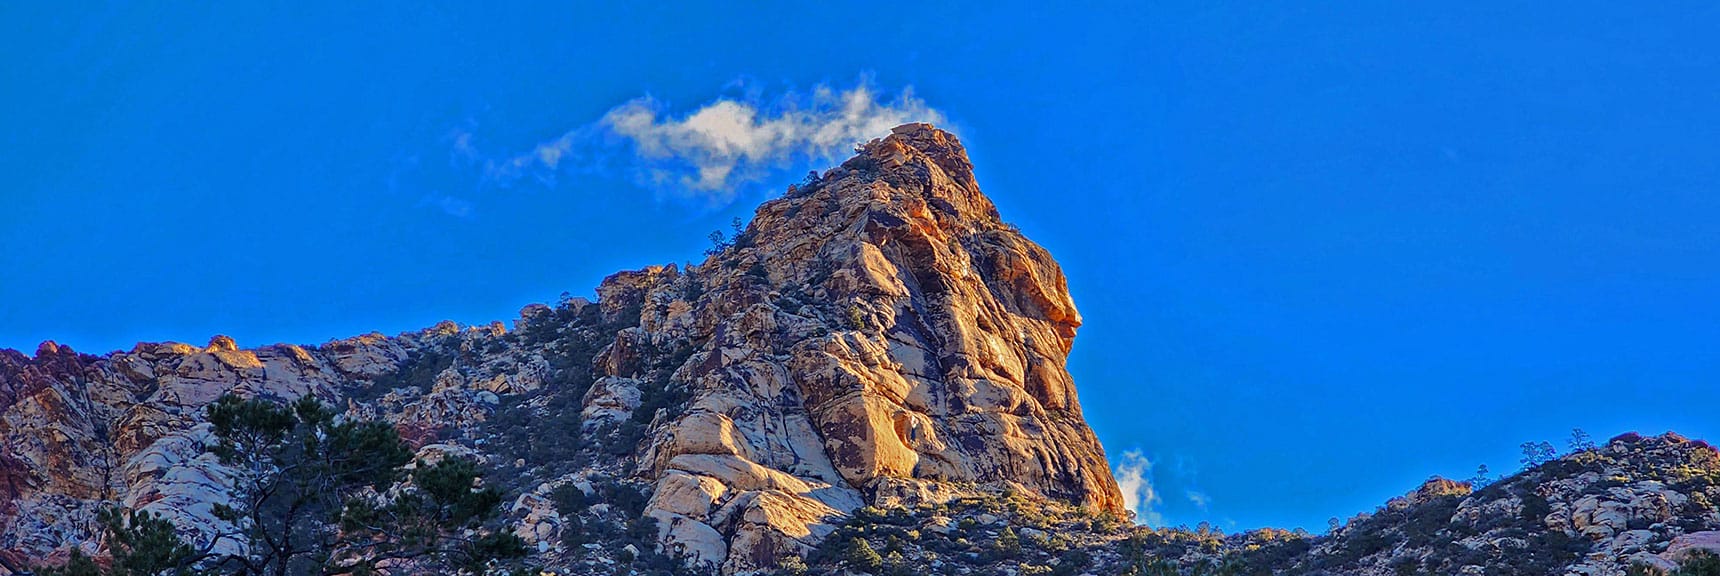 Closer View of Jagged NE Pillar on White Rock Mountain Summit | White Rock Mountain Loop Trail | Red Rock Canyon, Nevada